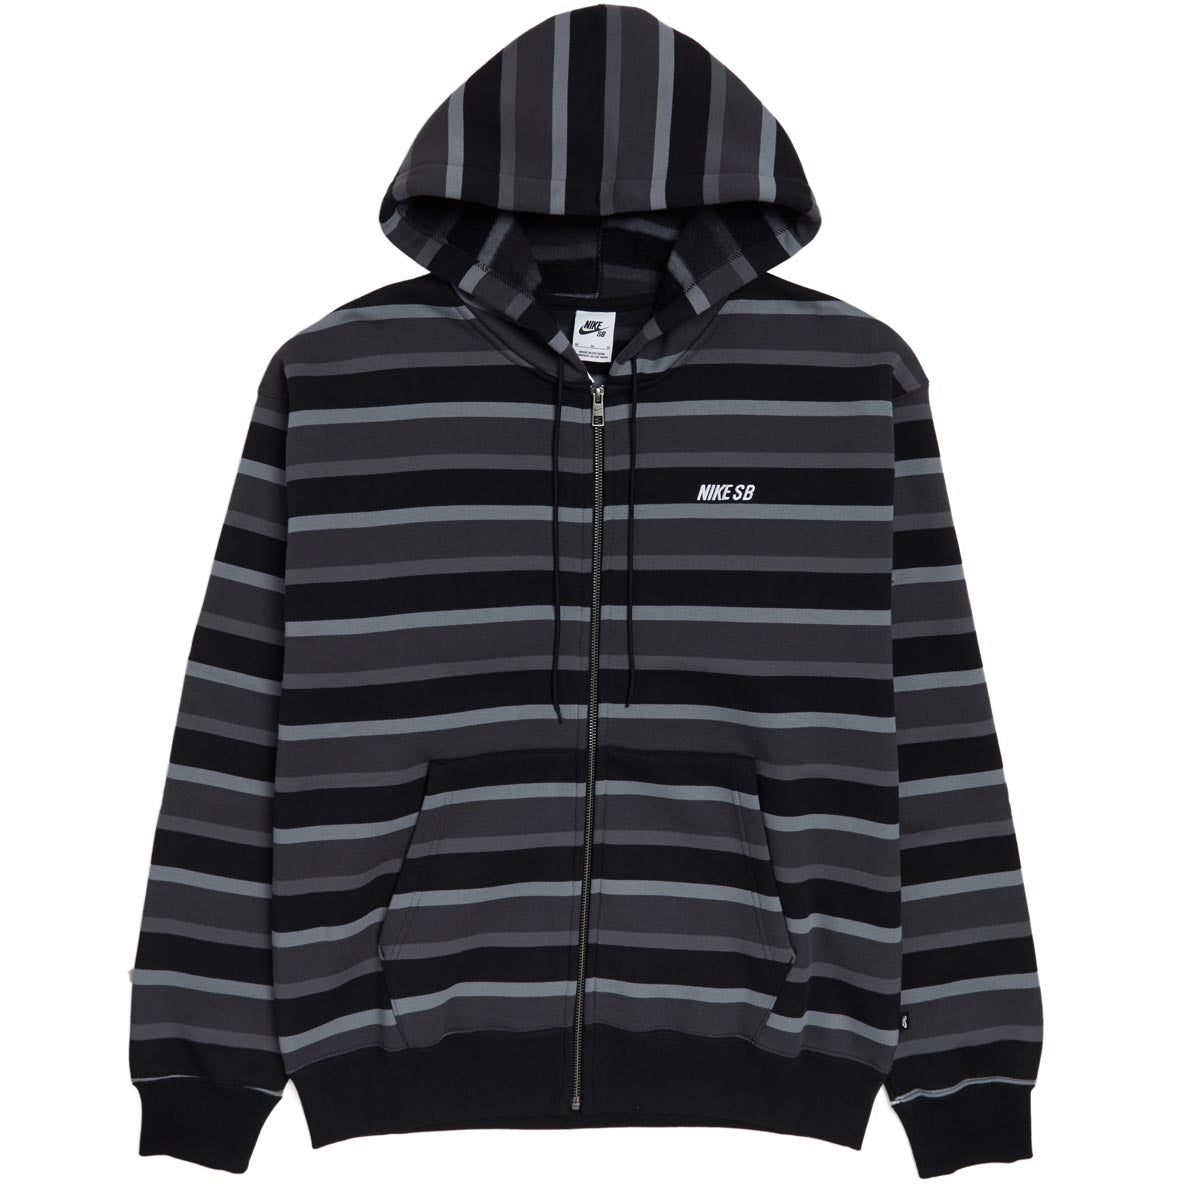 Nike SB Striped Zip Up Hoodie - Cool Grey/Anthracite/White image 1